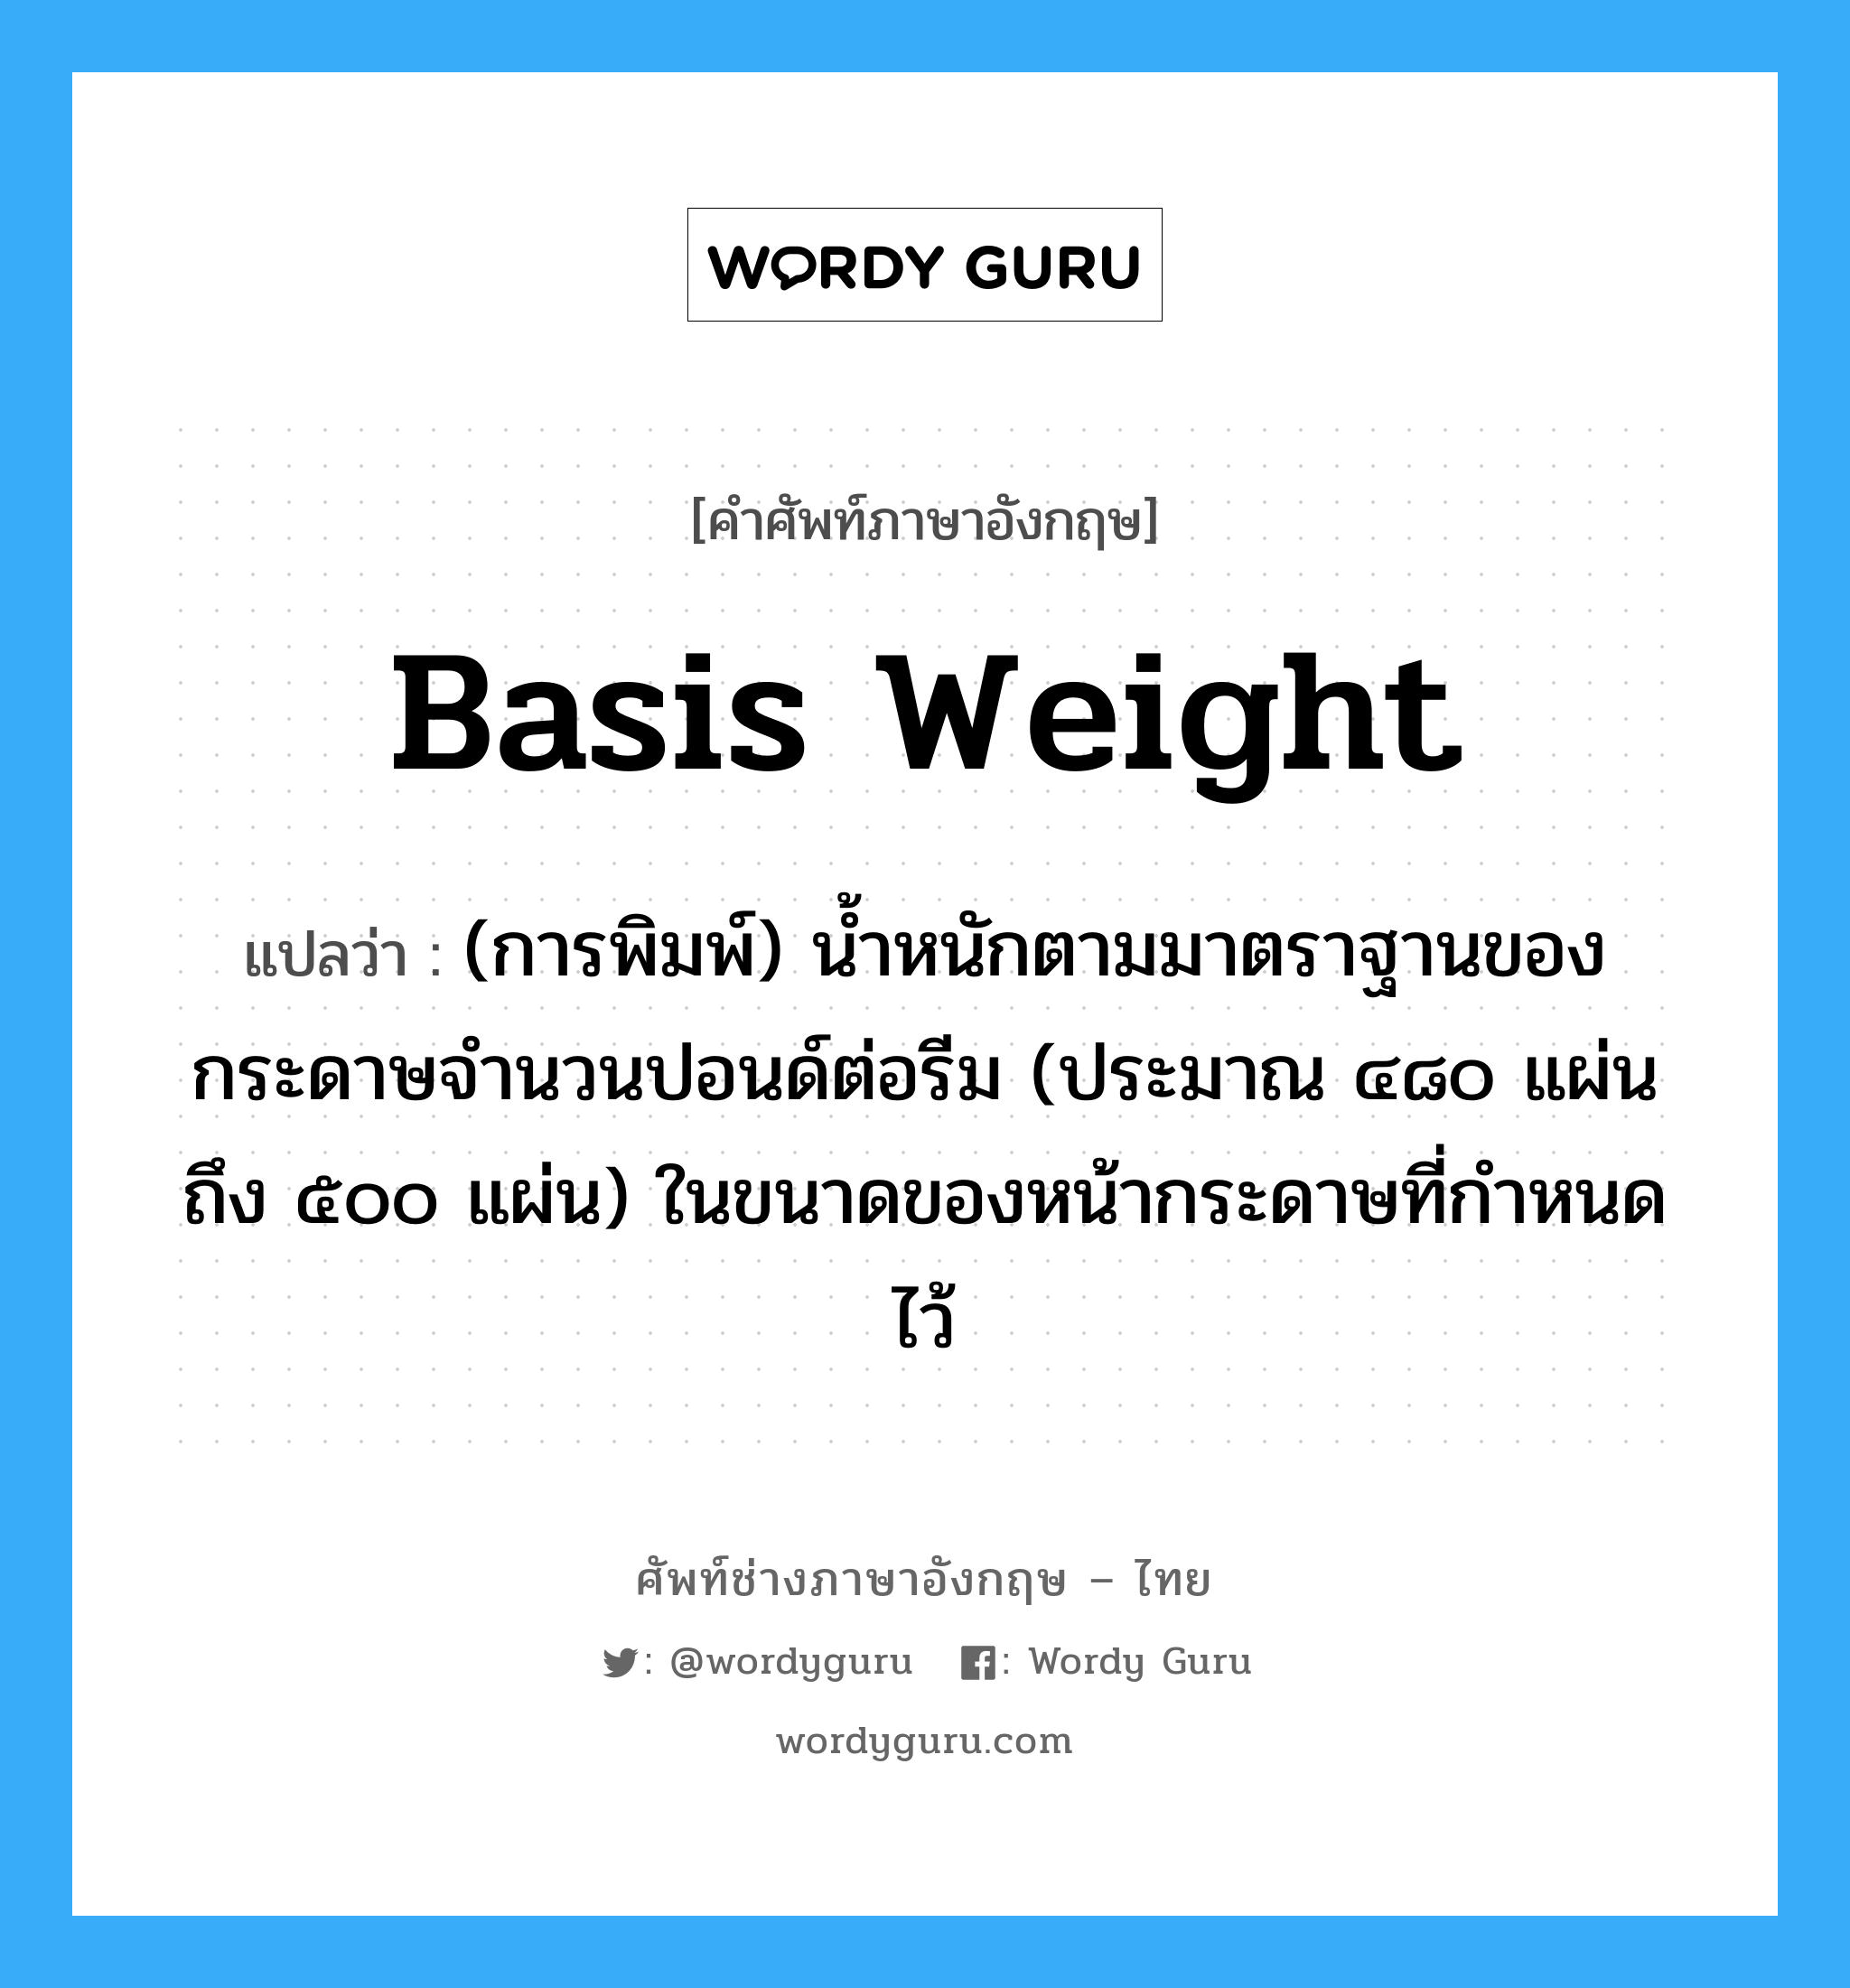 basis weight แปลว่า?, คำศัพท์ช่างภาษาอังกฤษ - ไทย basis weight คำศัพท์ภาษาอังกฤษ basis weight แปลว่า (การพิมพ์) น้ำหนักตามมาตราฐานของกระดาษจำนวนปอนด์ต่อรีม (ประมาณ ๔๘๐ แผ่น ถึง ๕๐๐ แผ่น) ในขนาดของหน้ากระดาษที่กำหนดไว้